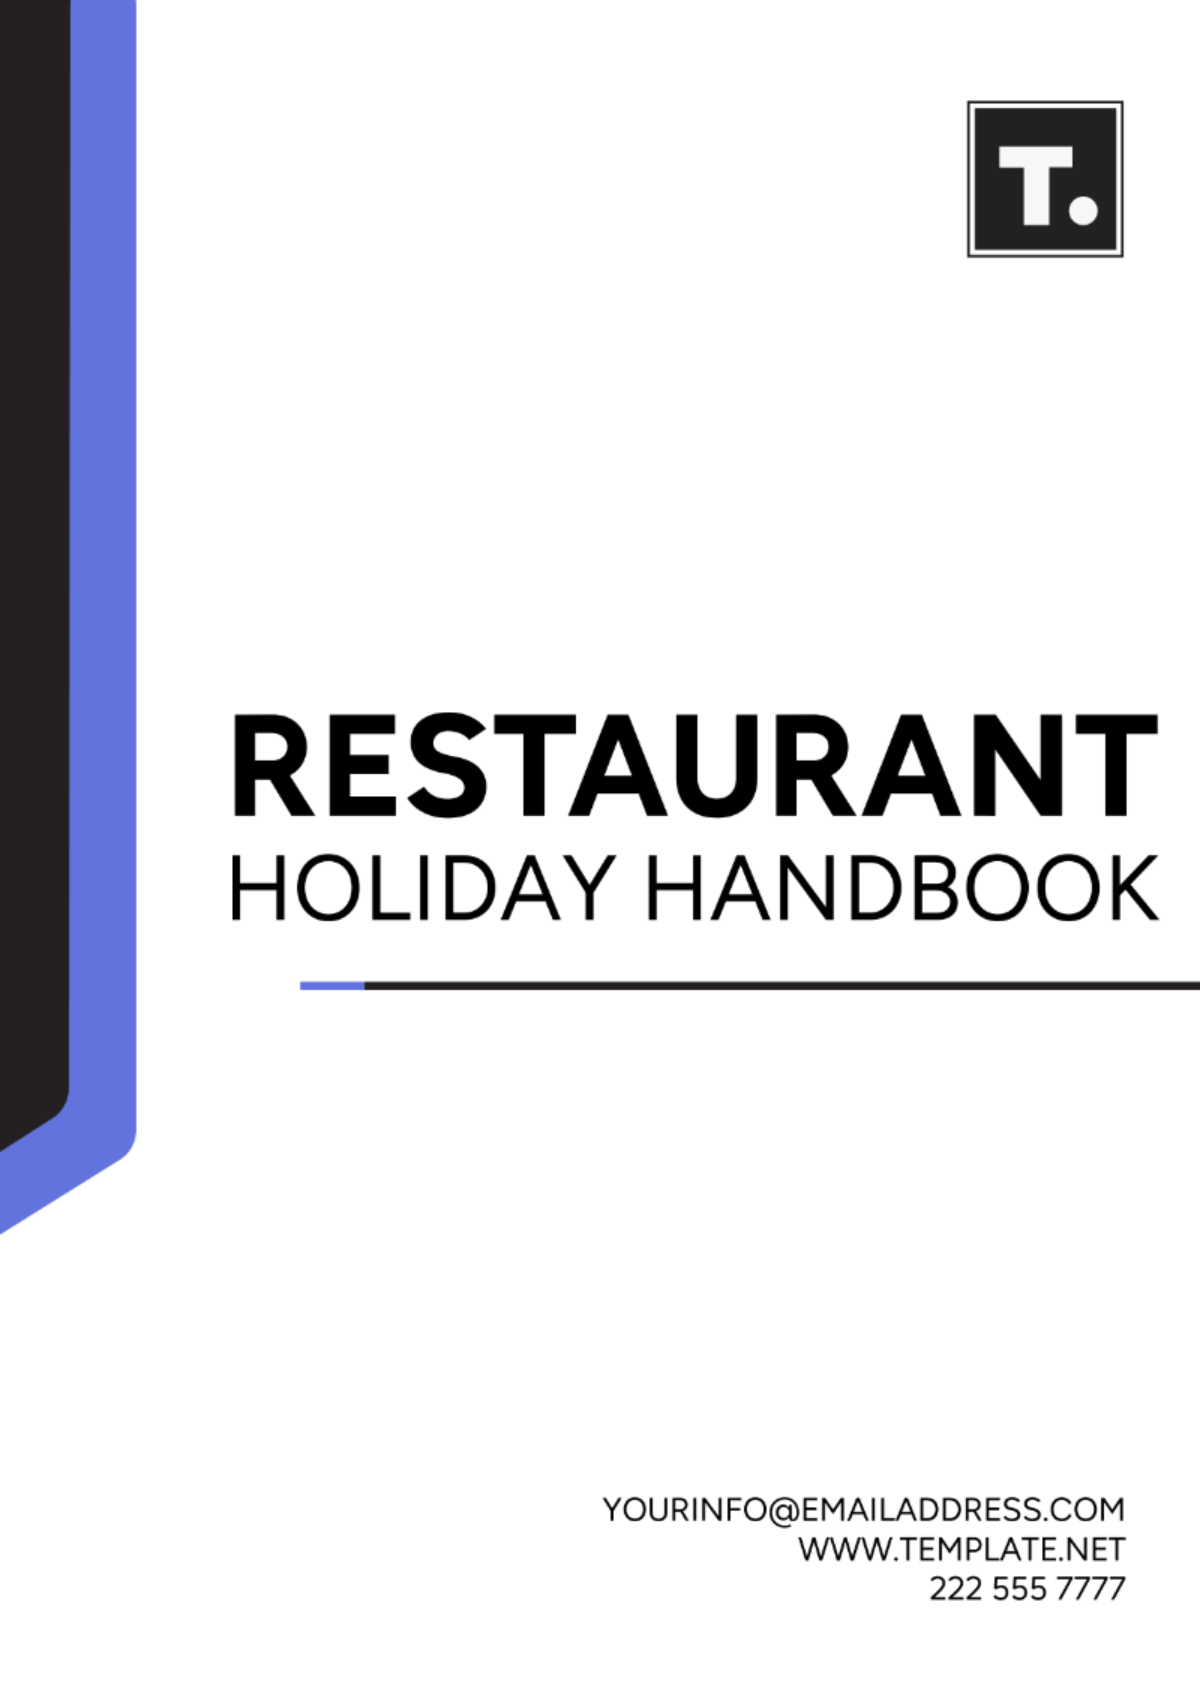 Free Restaurant Holiday Handbook Template